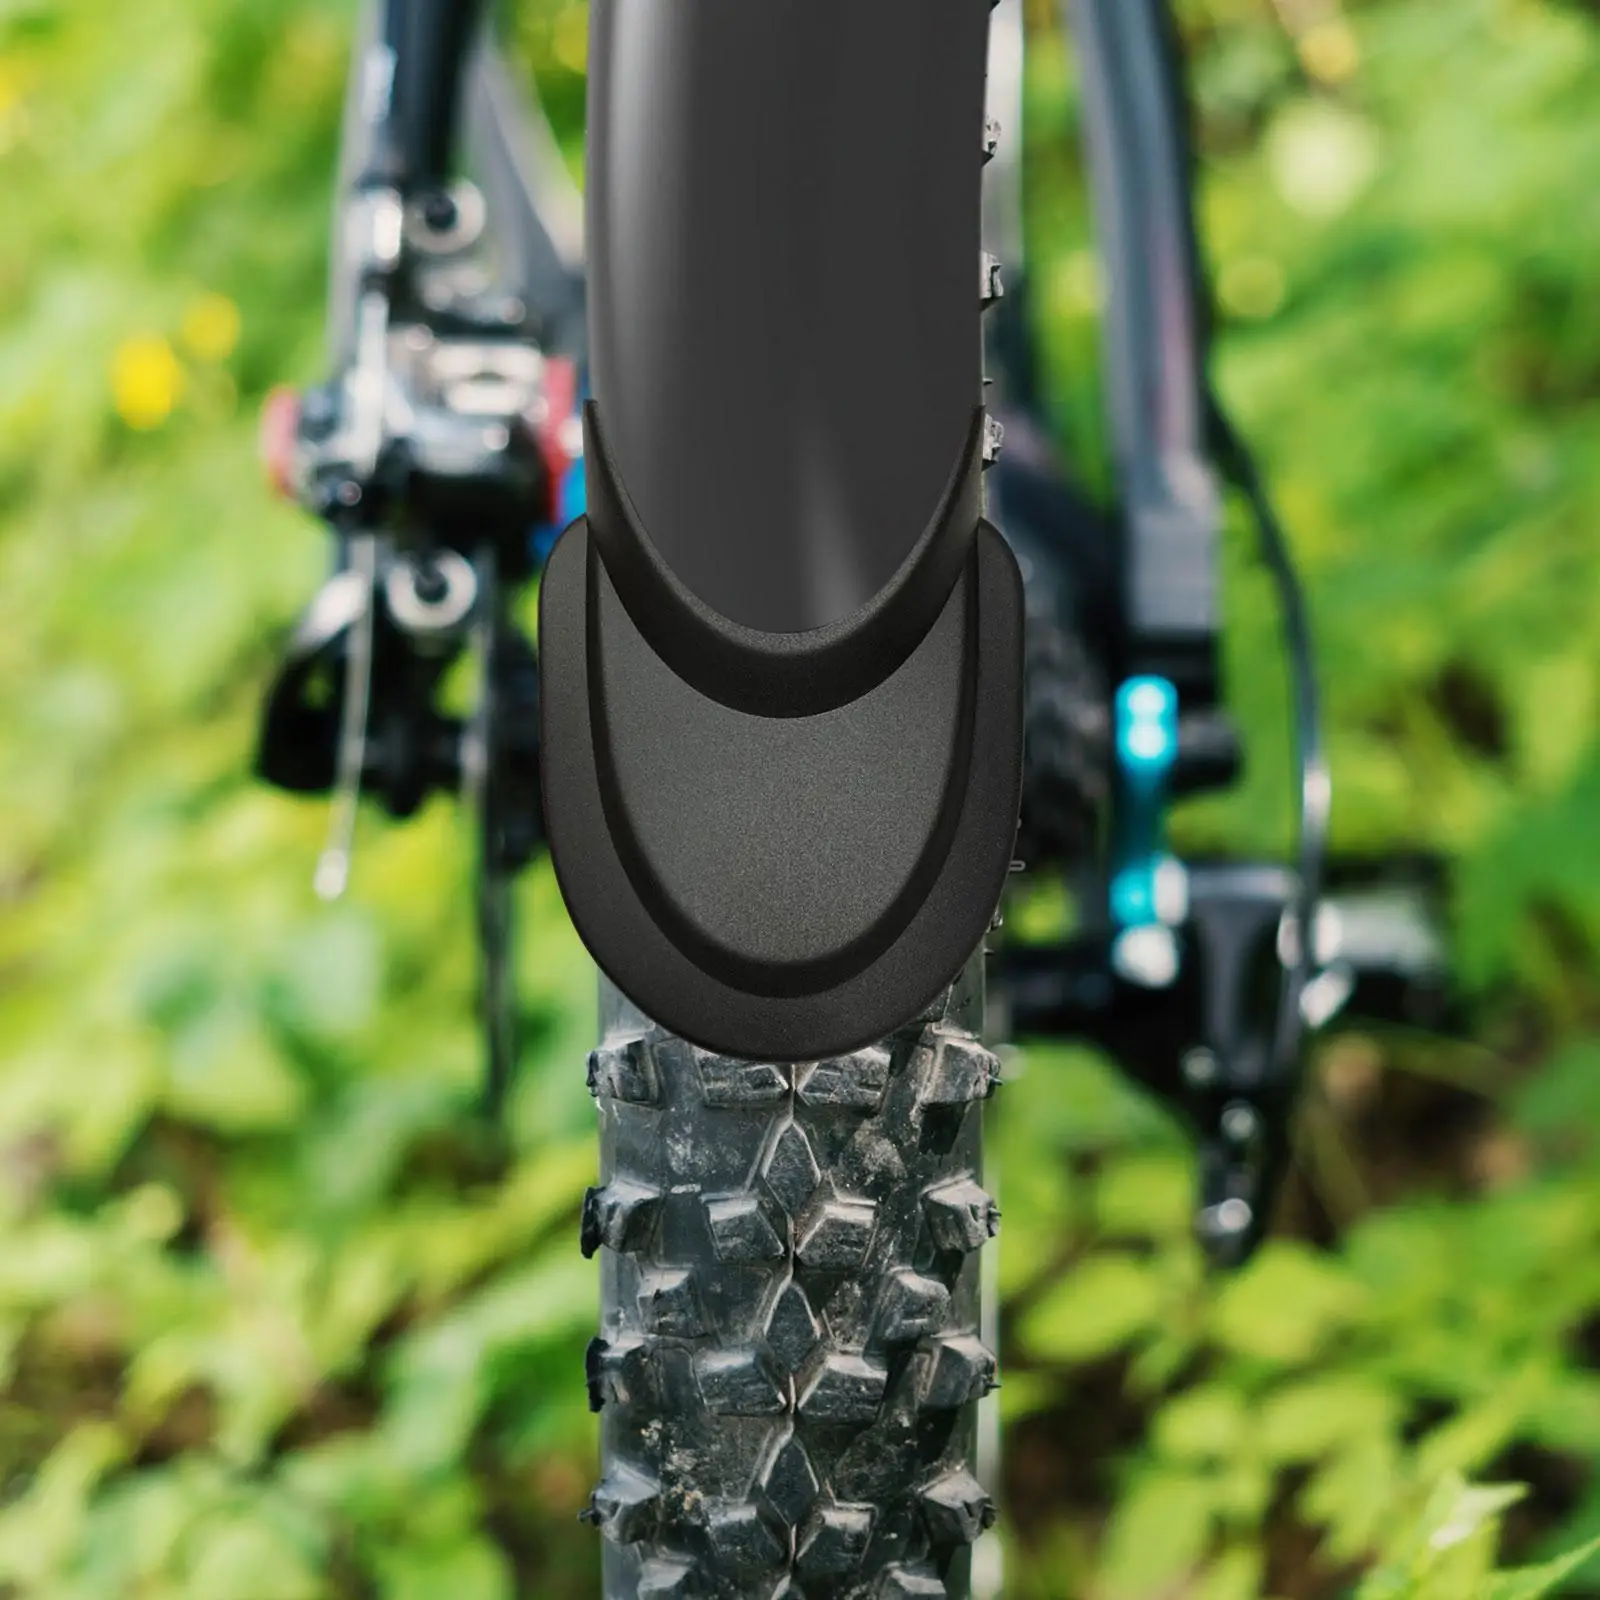 Bikes Mud Flap Bike Mudguard Bike Mud Guard Accessories Fender Protection for